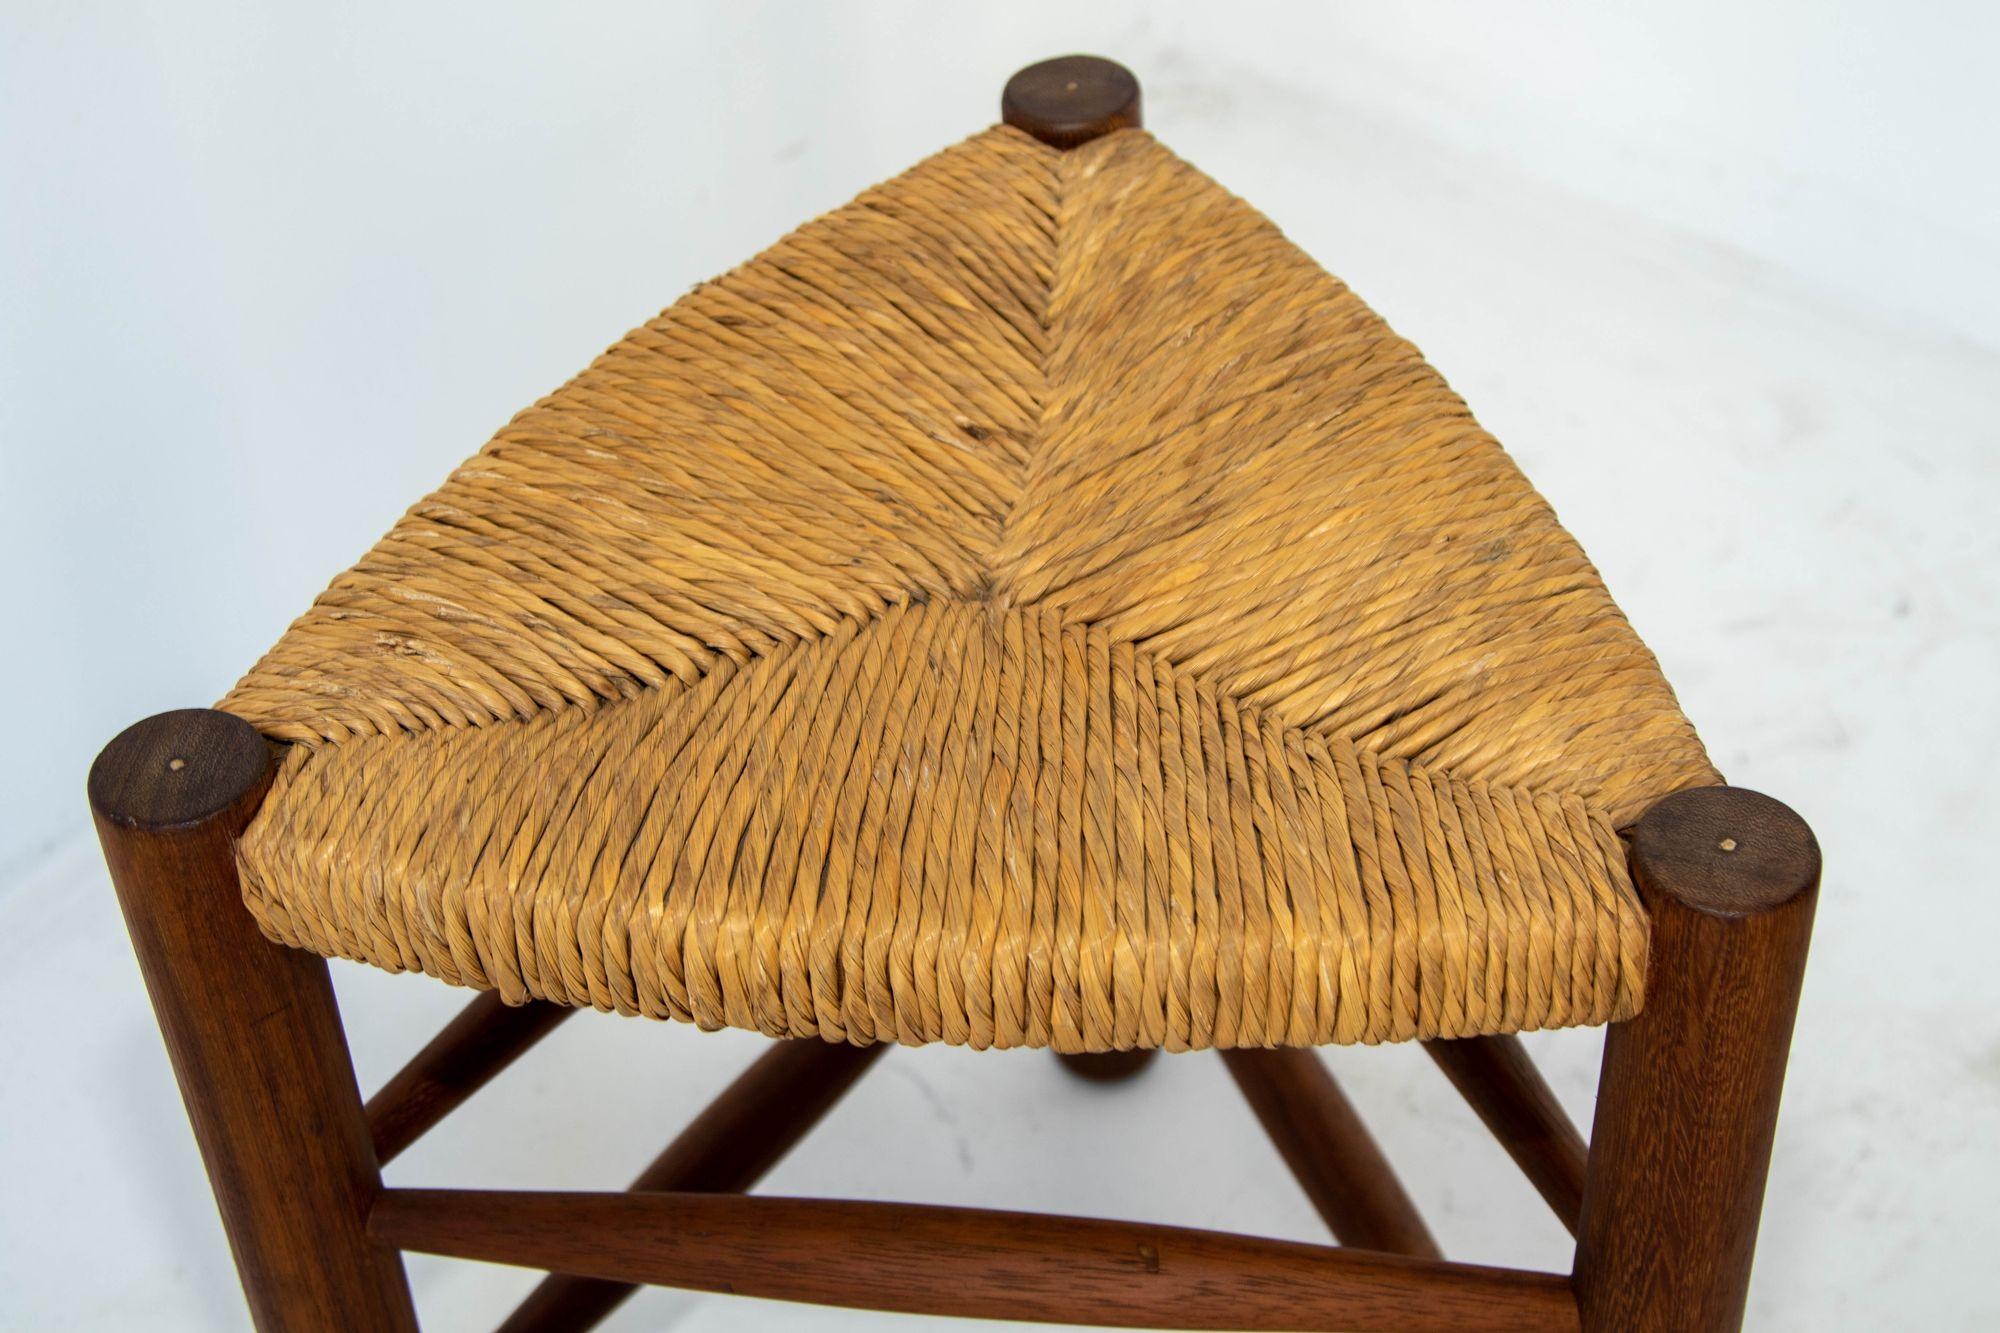 triangular stool